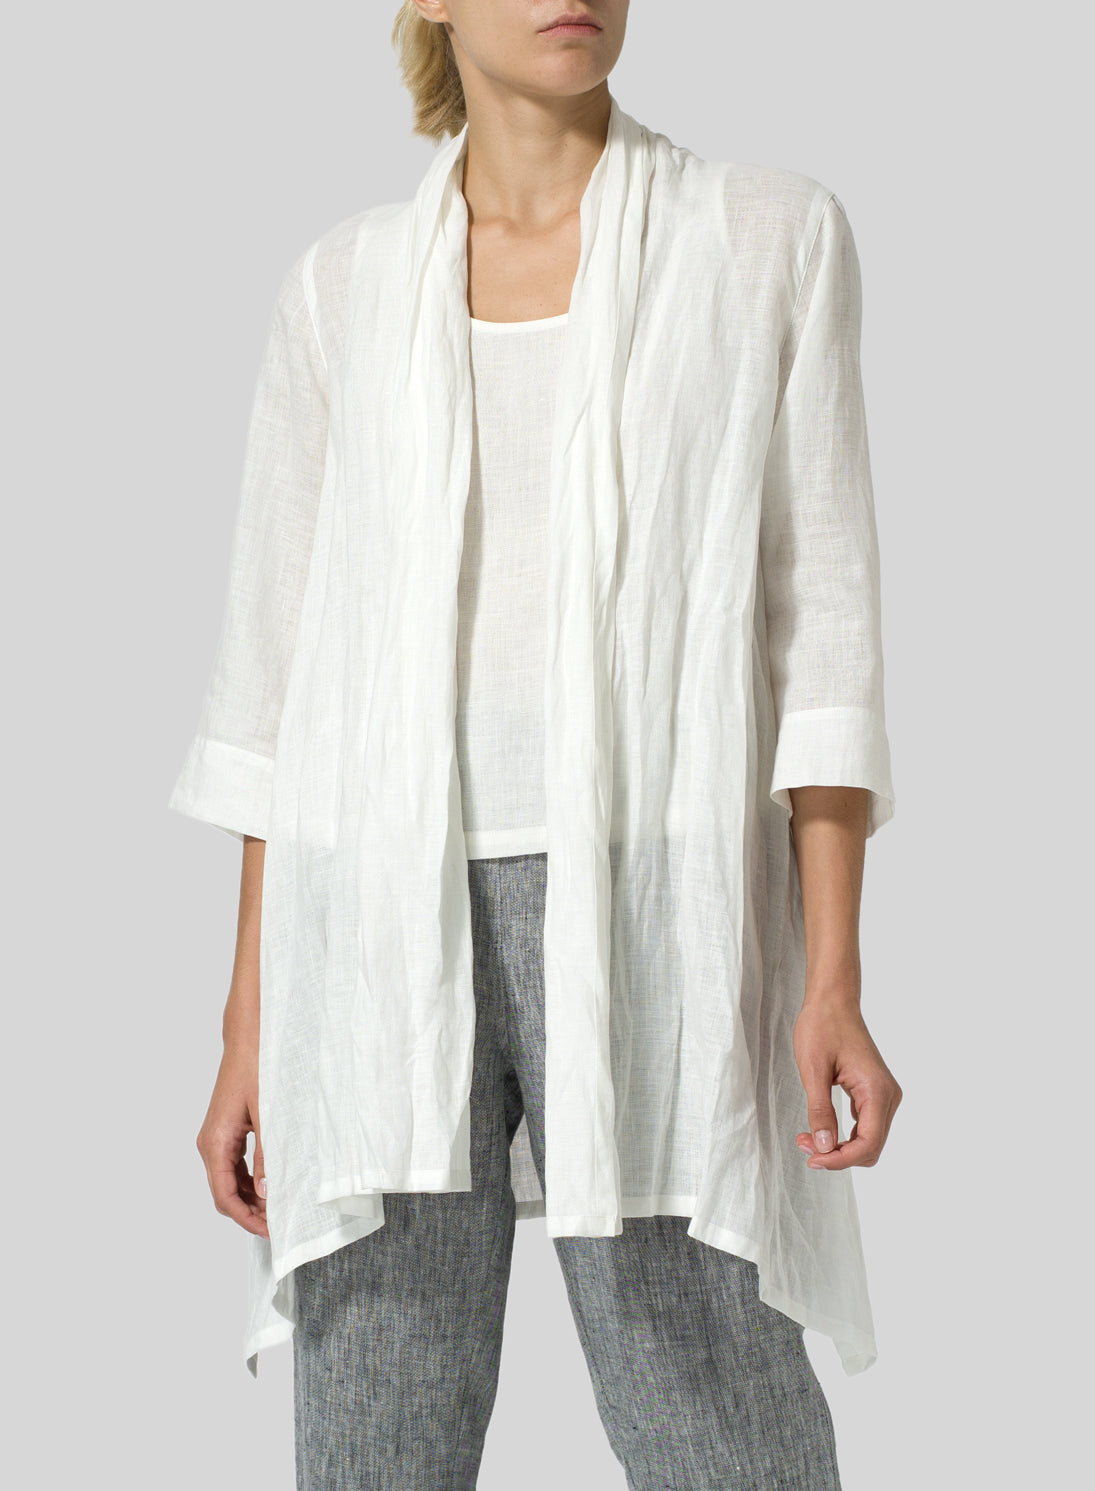 Cotton And Linen Open Front Jacket - boddysize